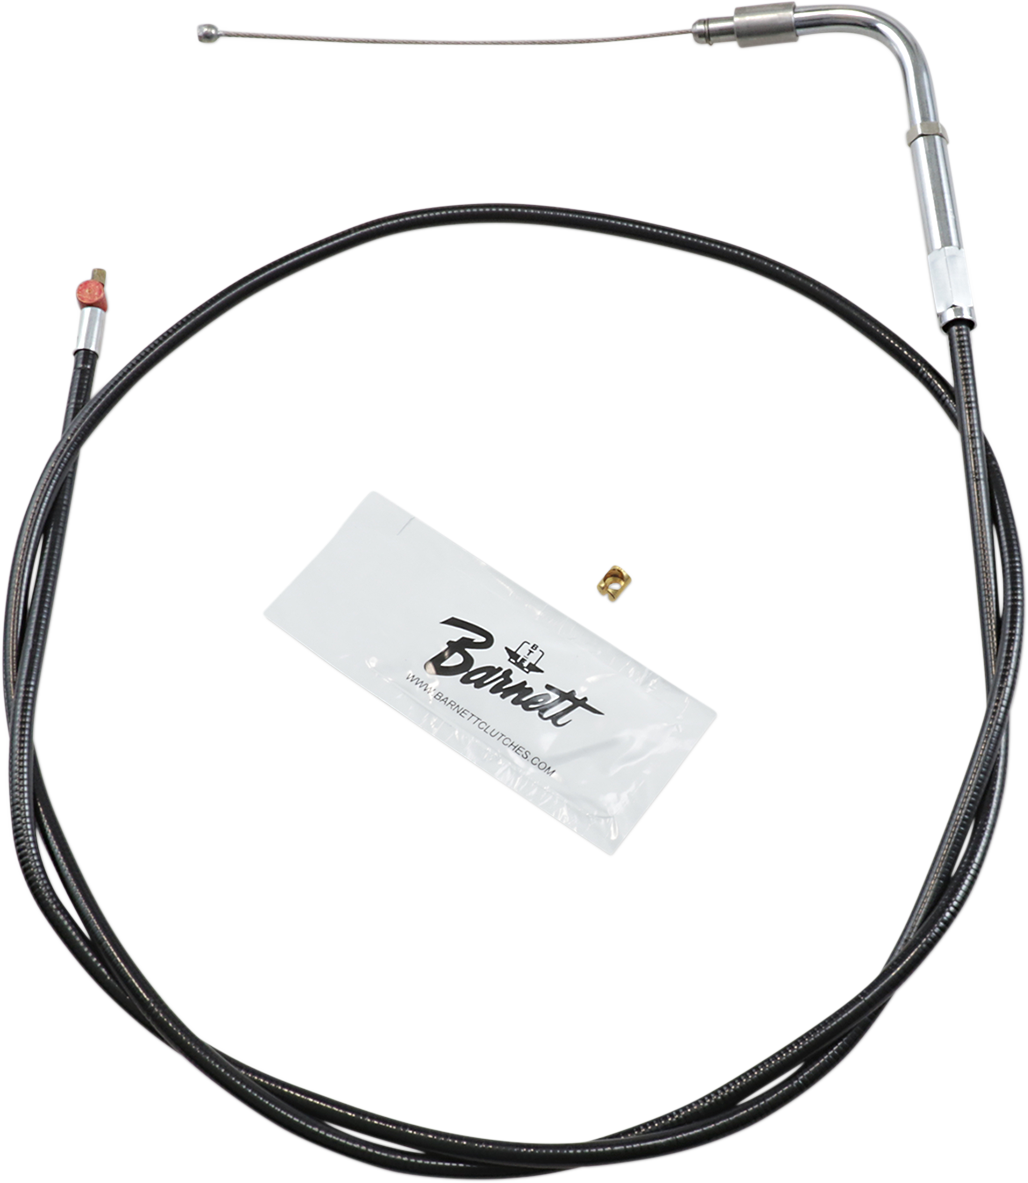 Cable de ralentí BARNETT - Negro 101-30-40017